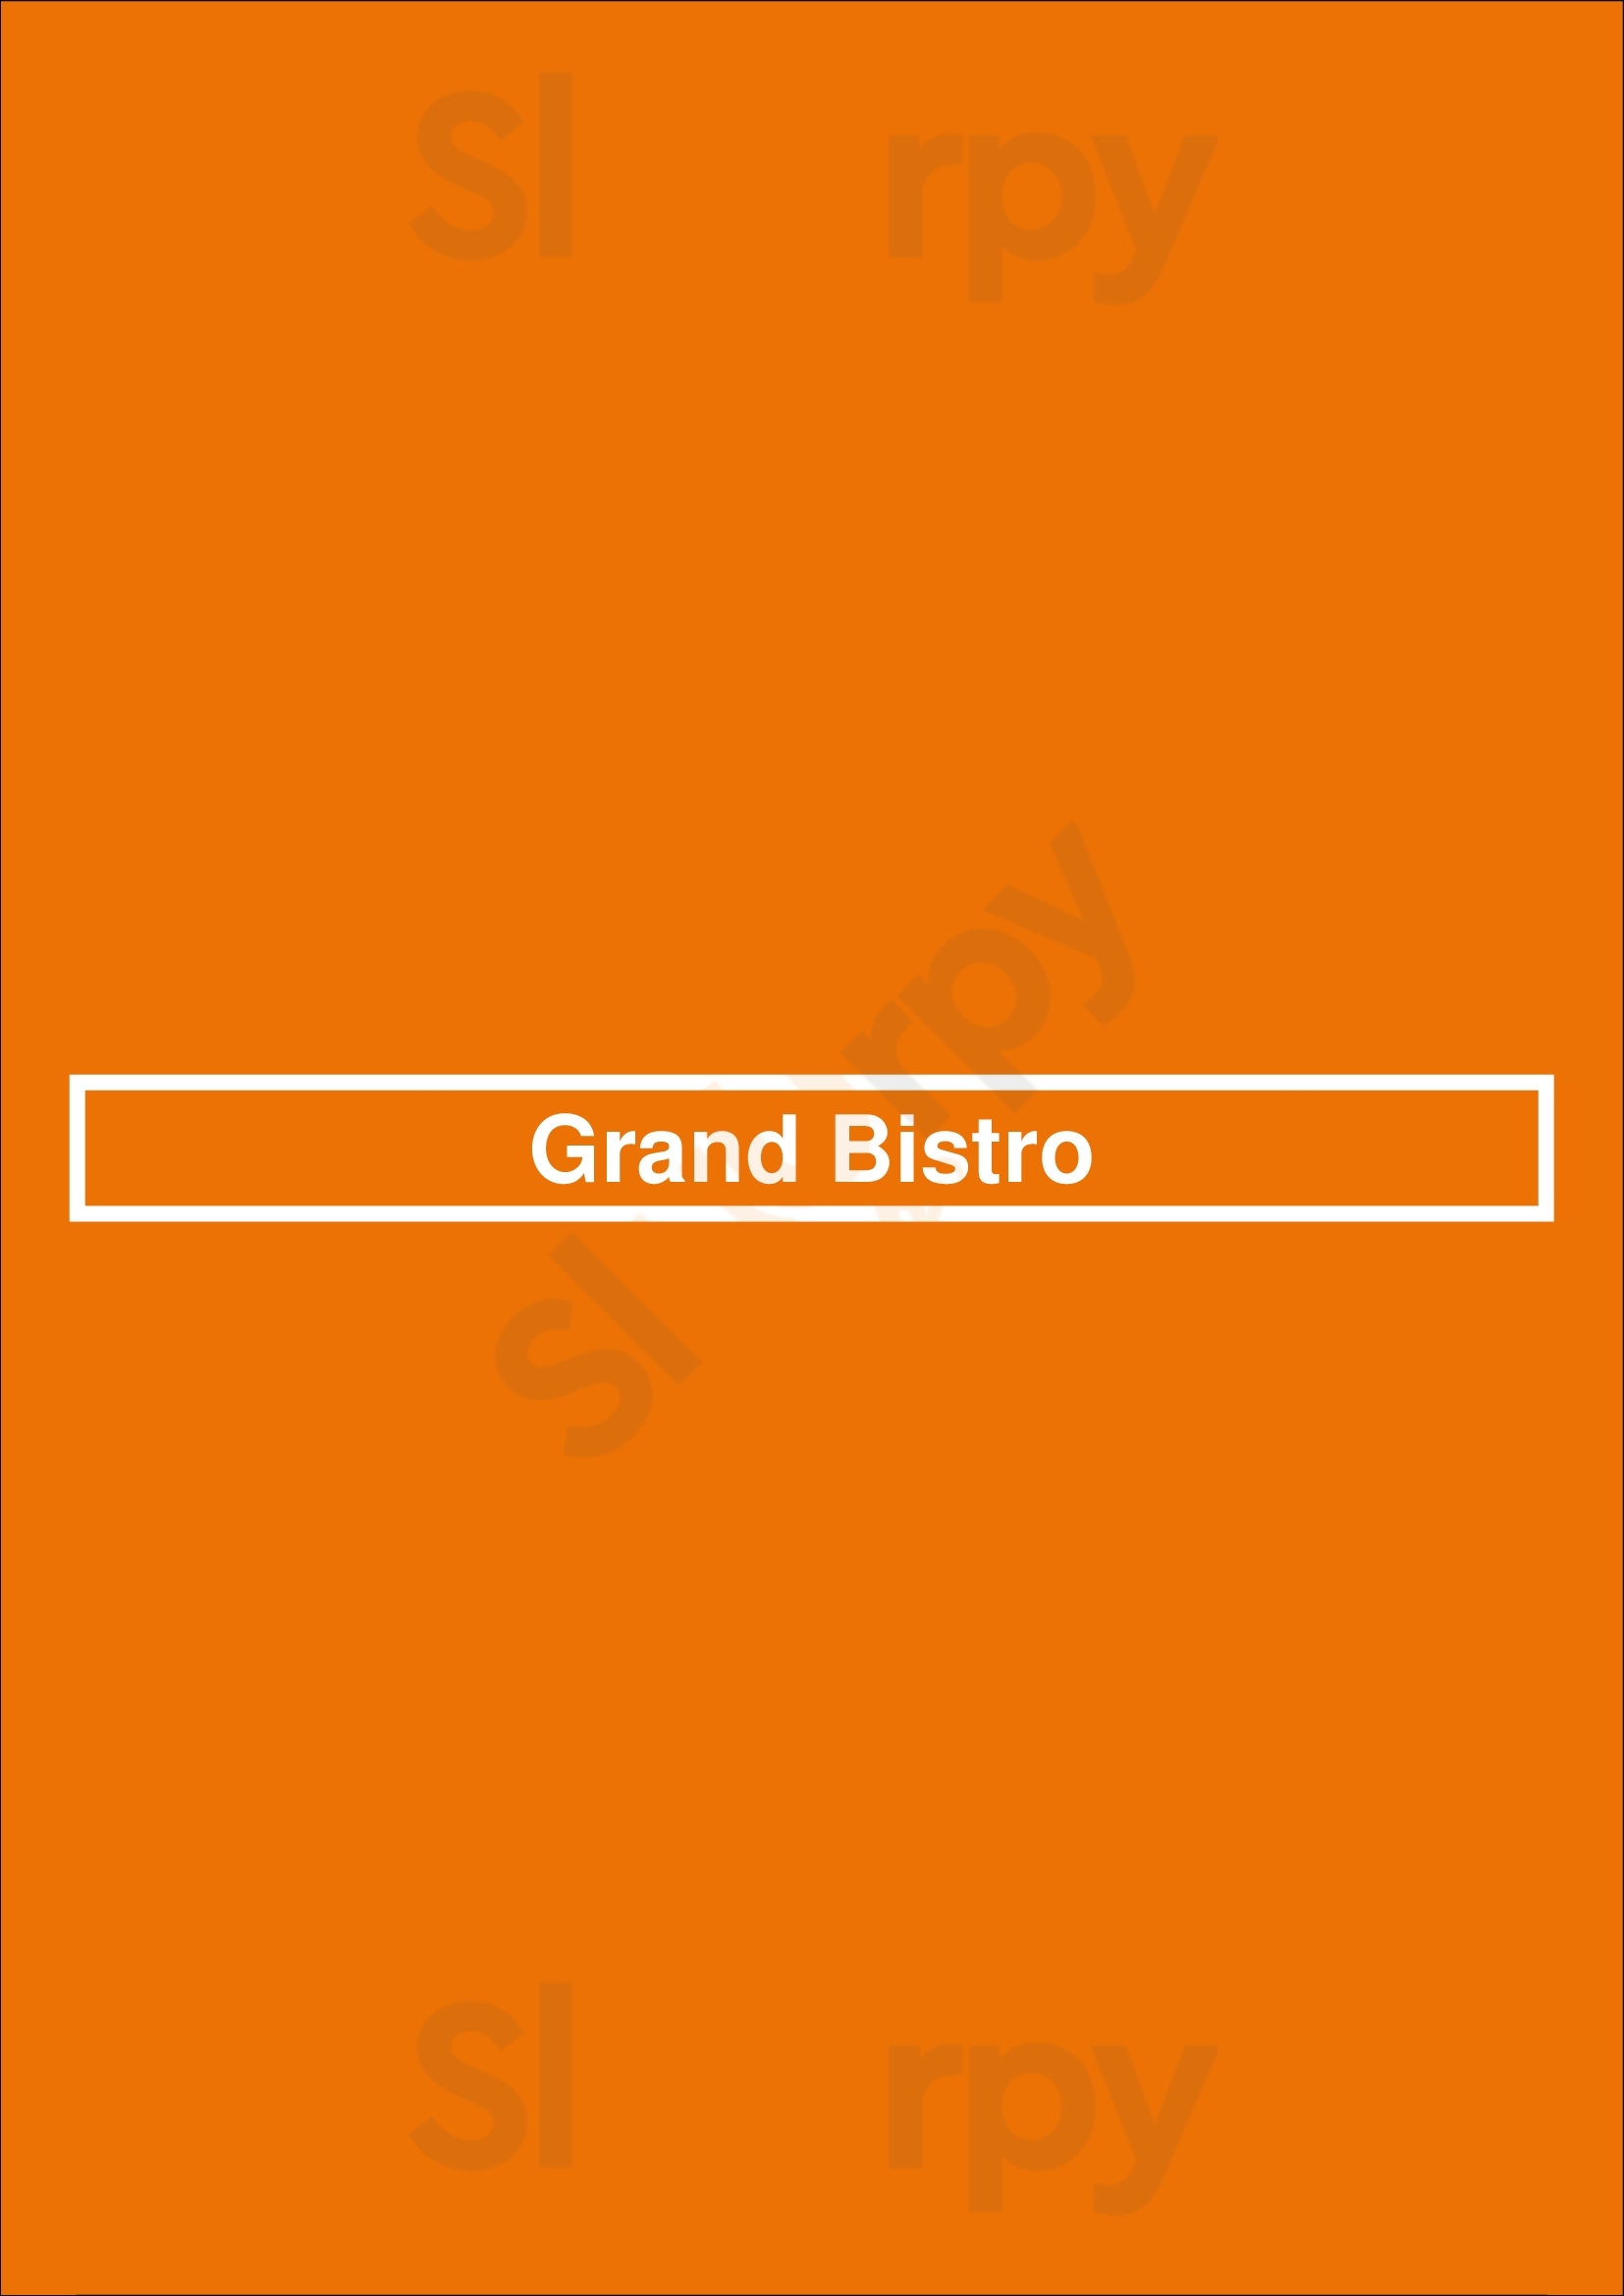 Grand Bistro Central City Menu - 1